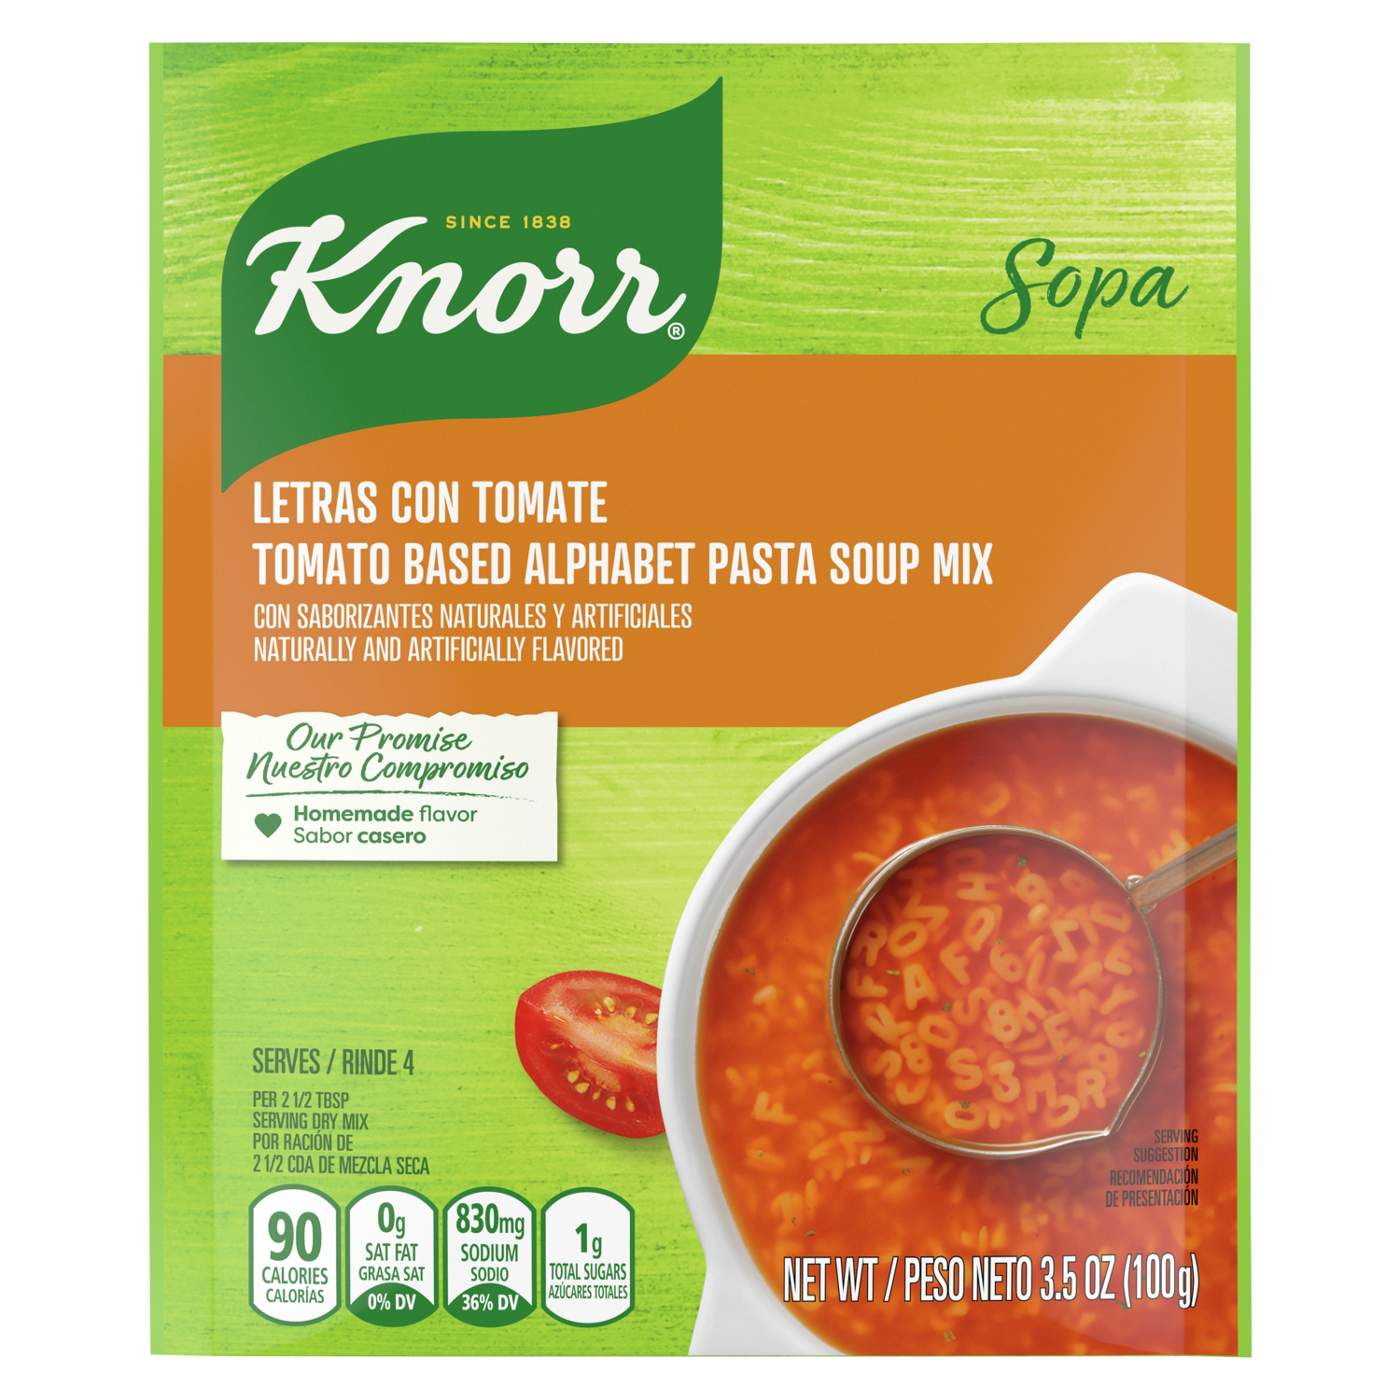 Knorr Sopa Alphabet Pasta Tomato Soup Mix; image 1 of 6